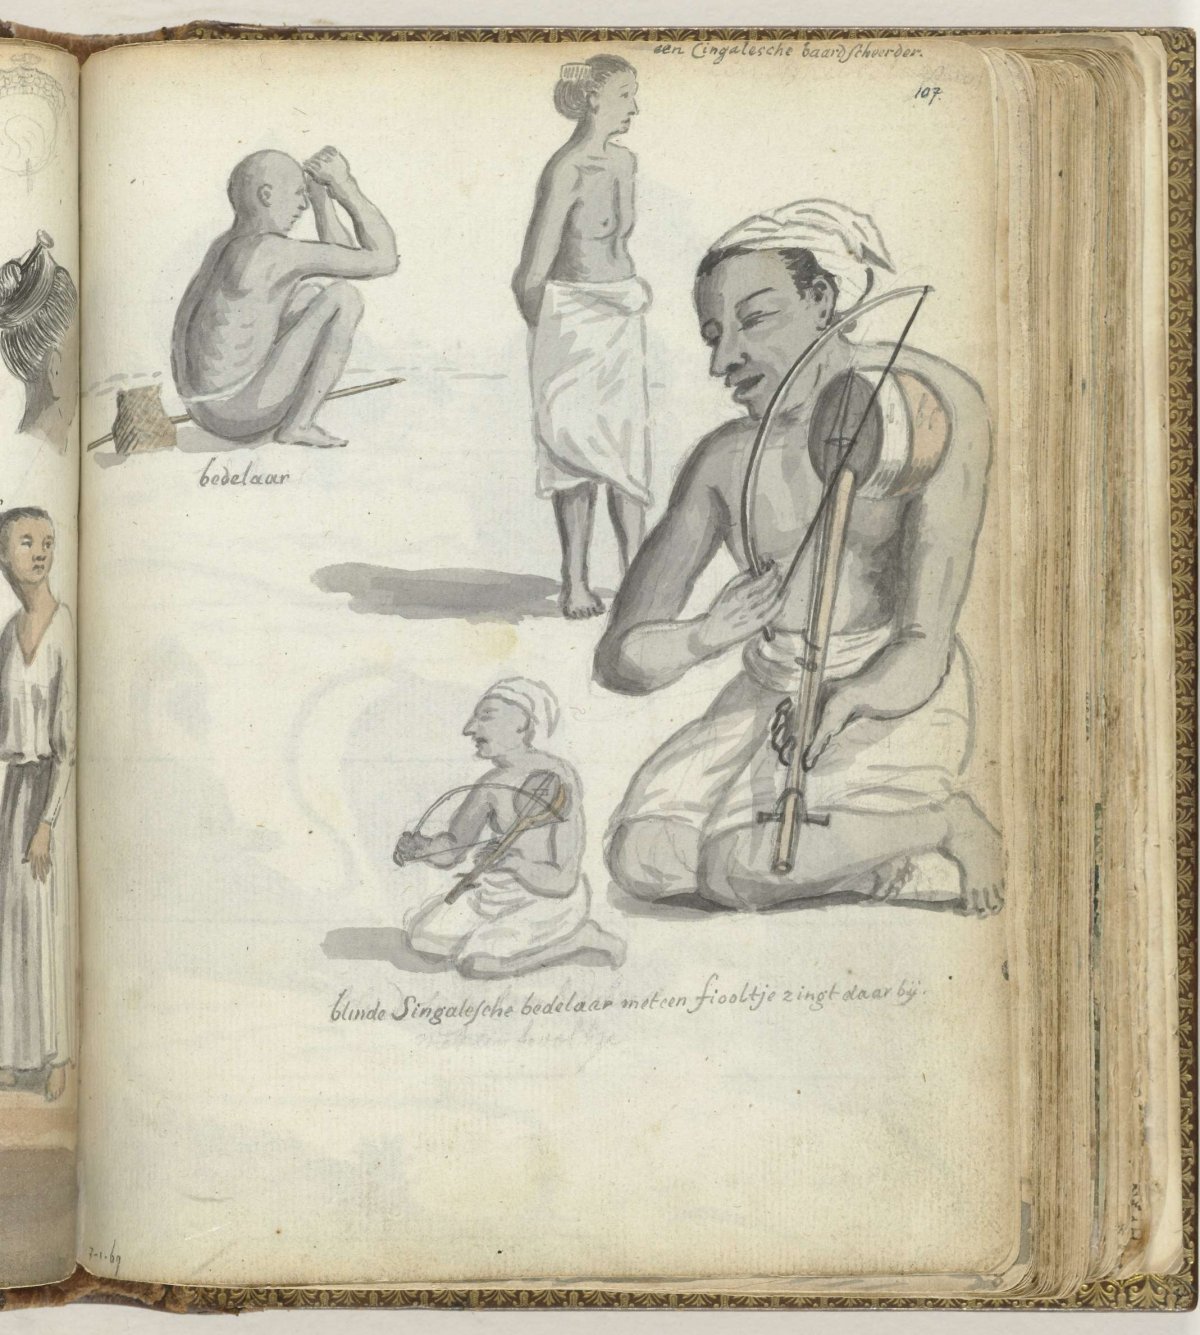 People types in Ceylon, Jan Brandes, 1785 - 1786